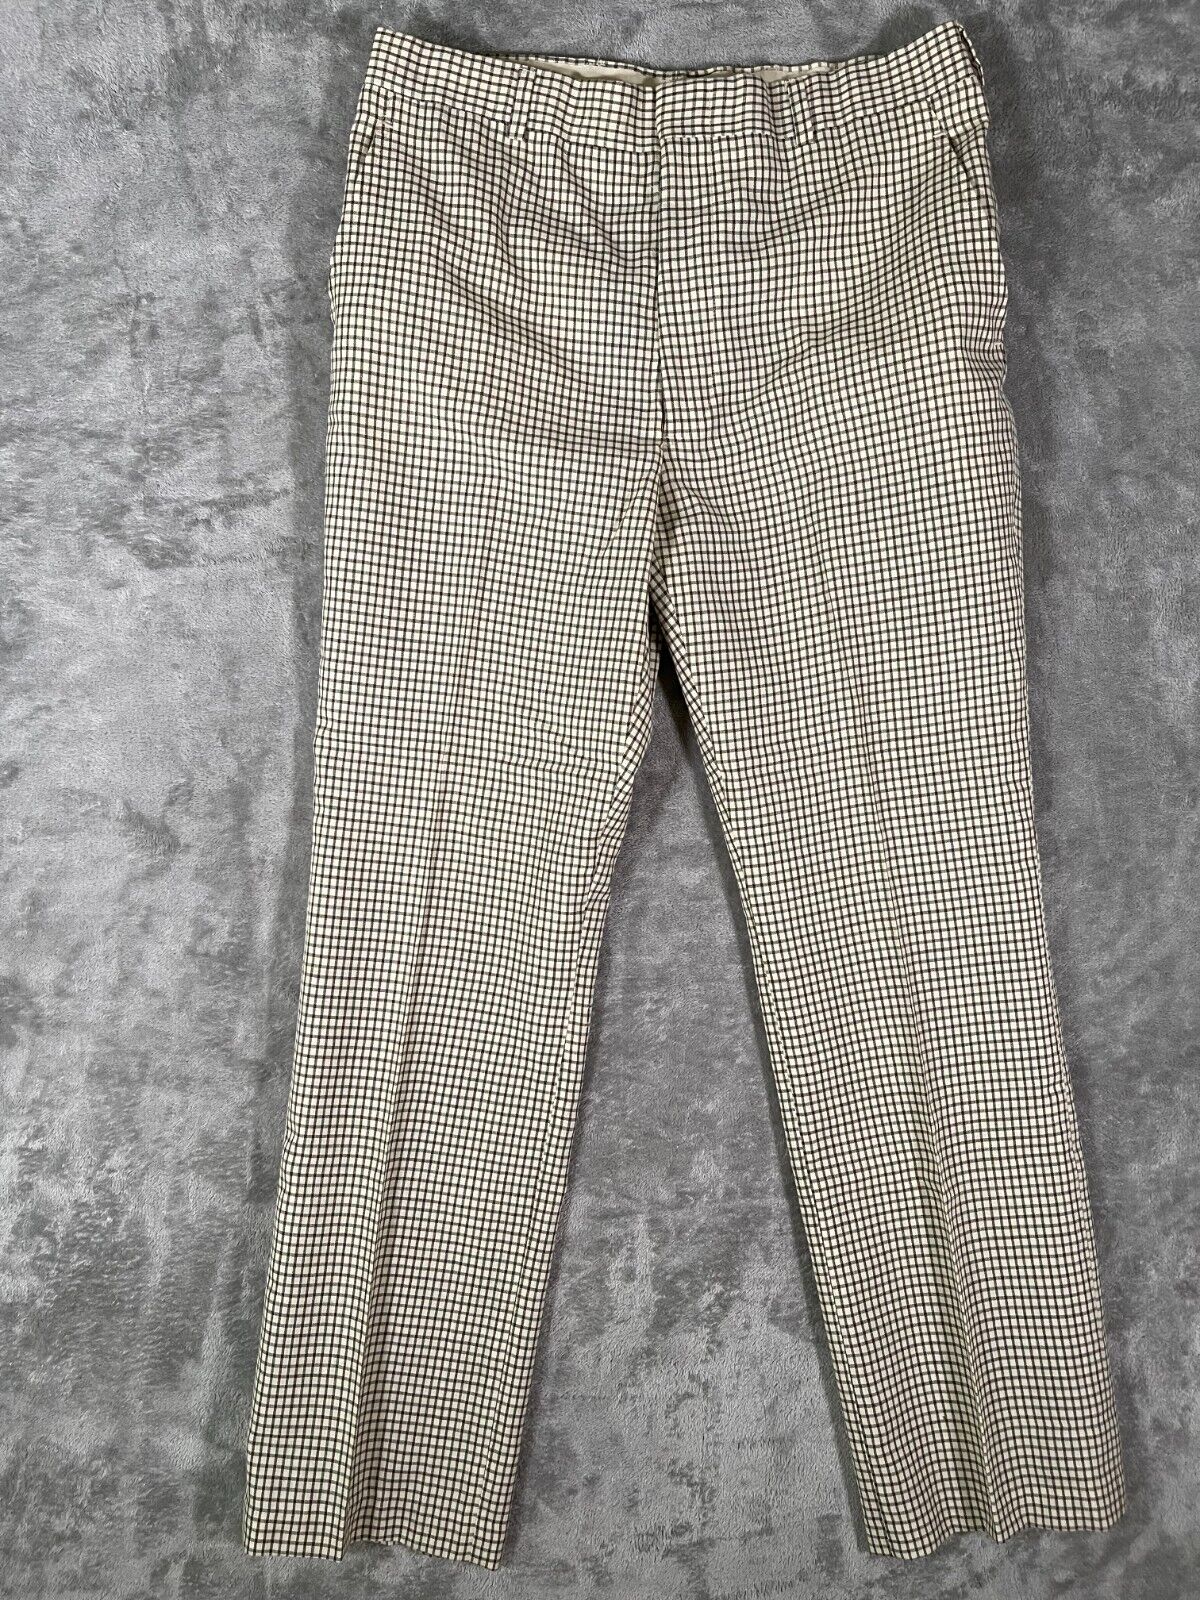 Vintage Arthur A Adler Mens Size 34x32 Beige Brown Check Gingham Dress Pants